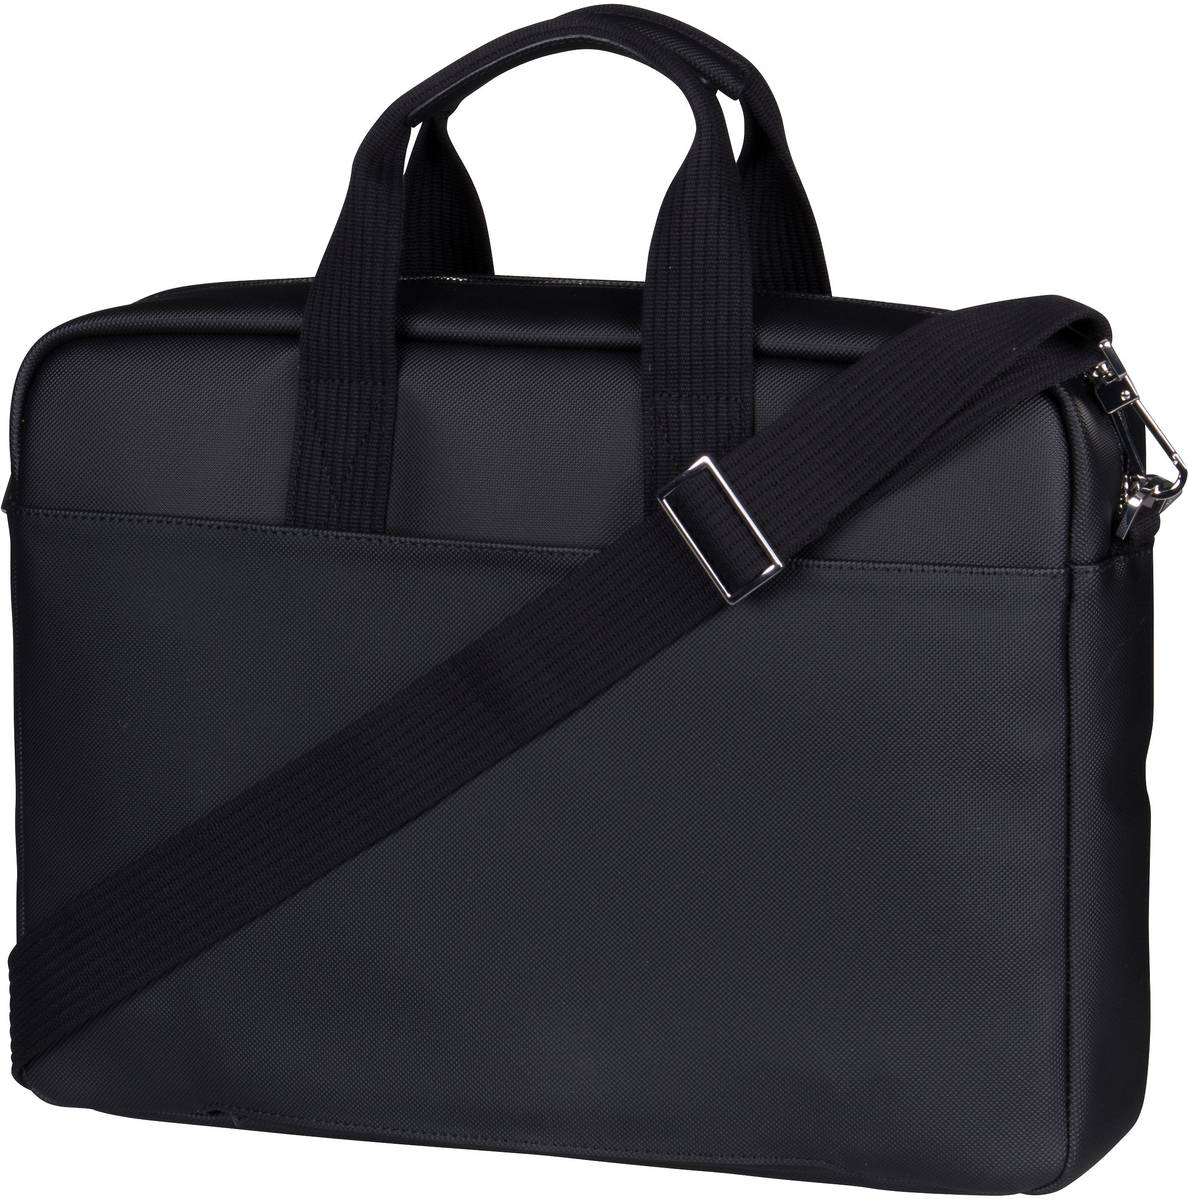 Lacoste Computer Bag 2451 - Black